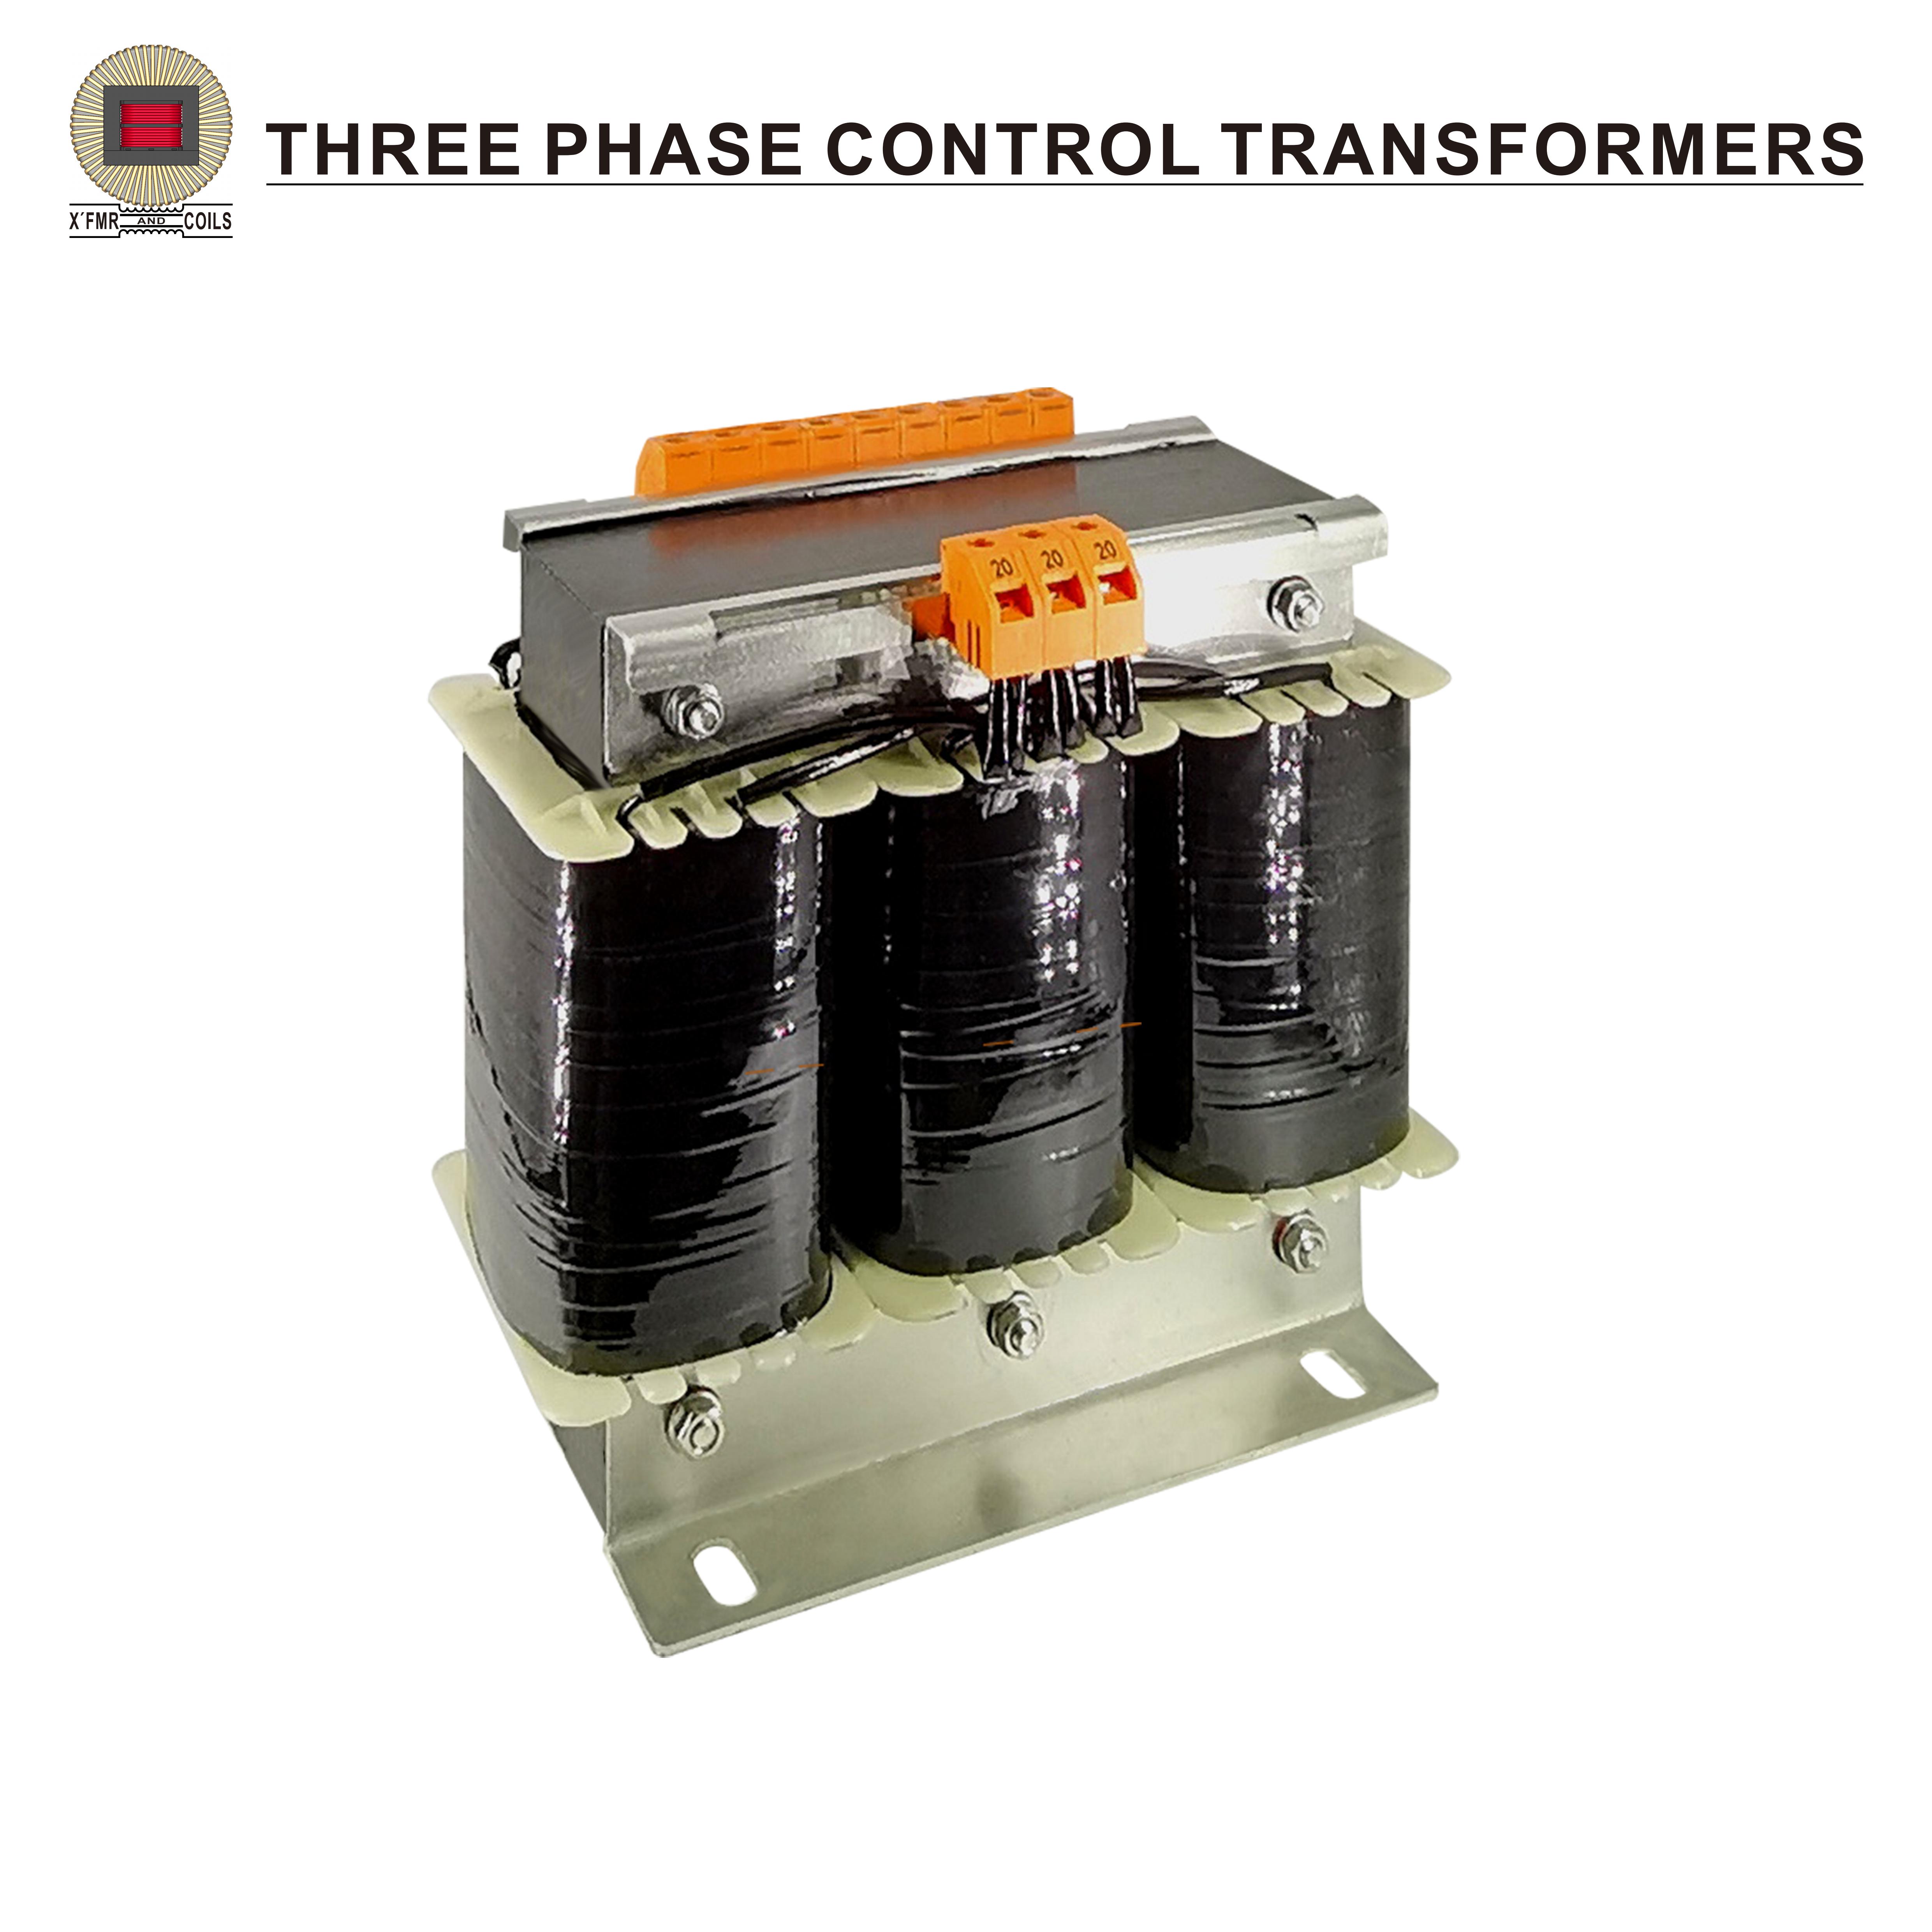 Three Phase Control Transformers TPCT-02 Series